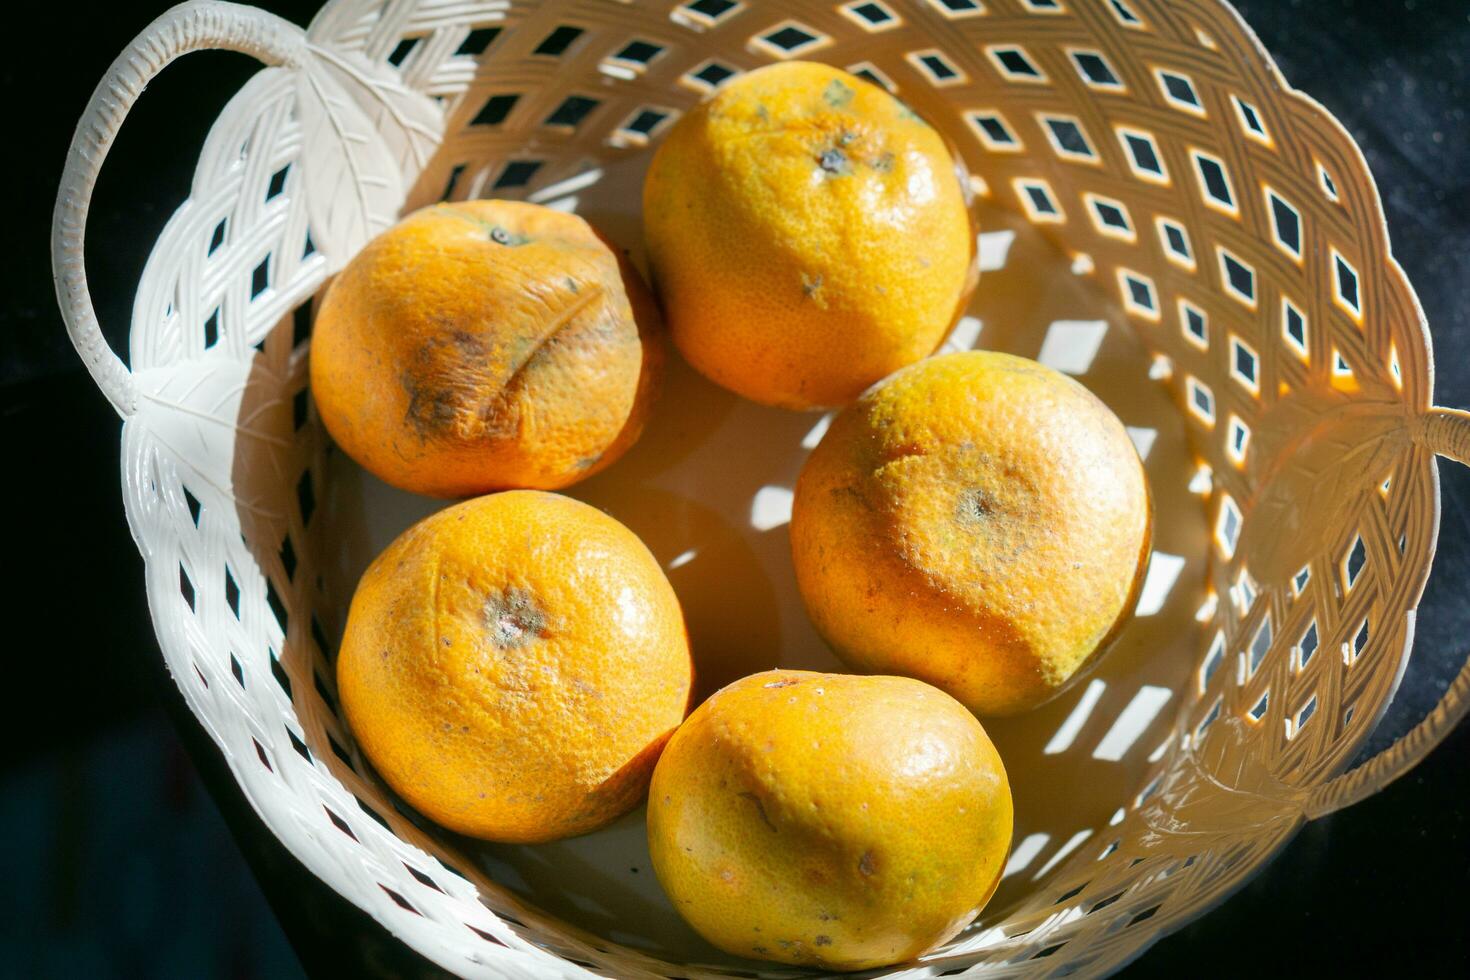 fresco e maduro afundado laranjas frutas. servido dentro rattan cesta. foto